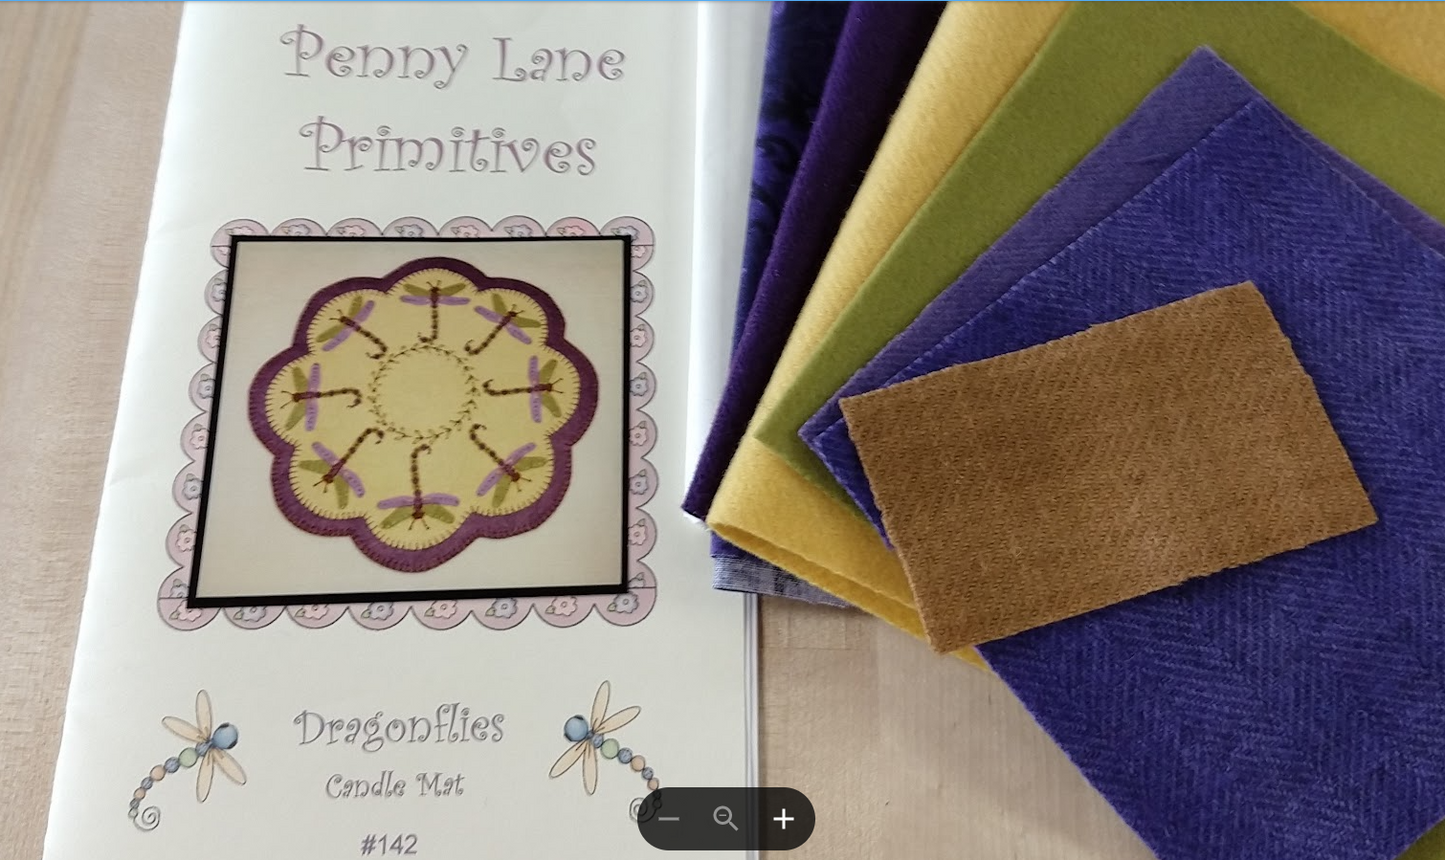 Dragonflies Candle Mat Kit by Penny Lane Primitives